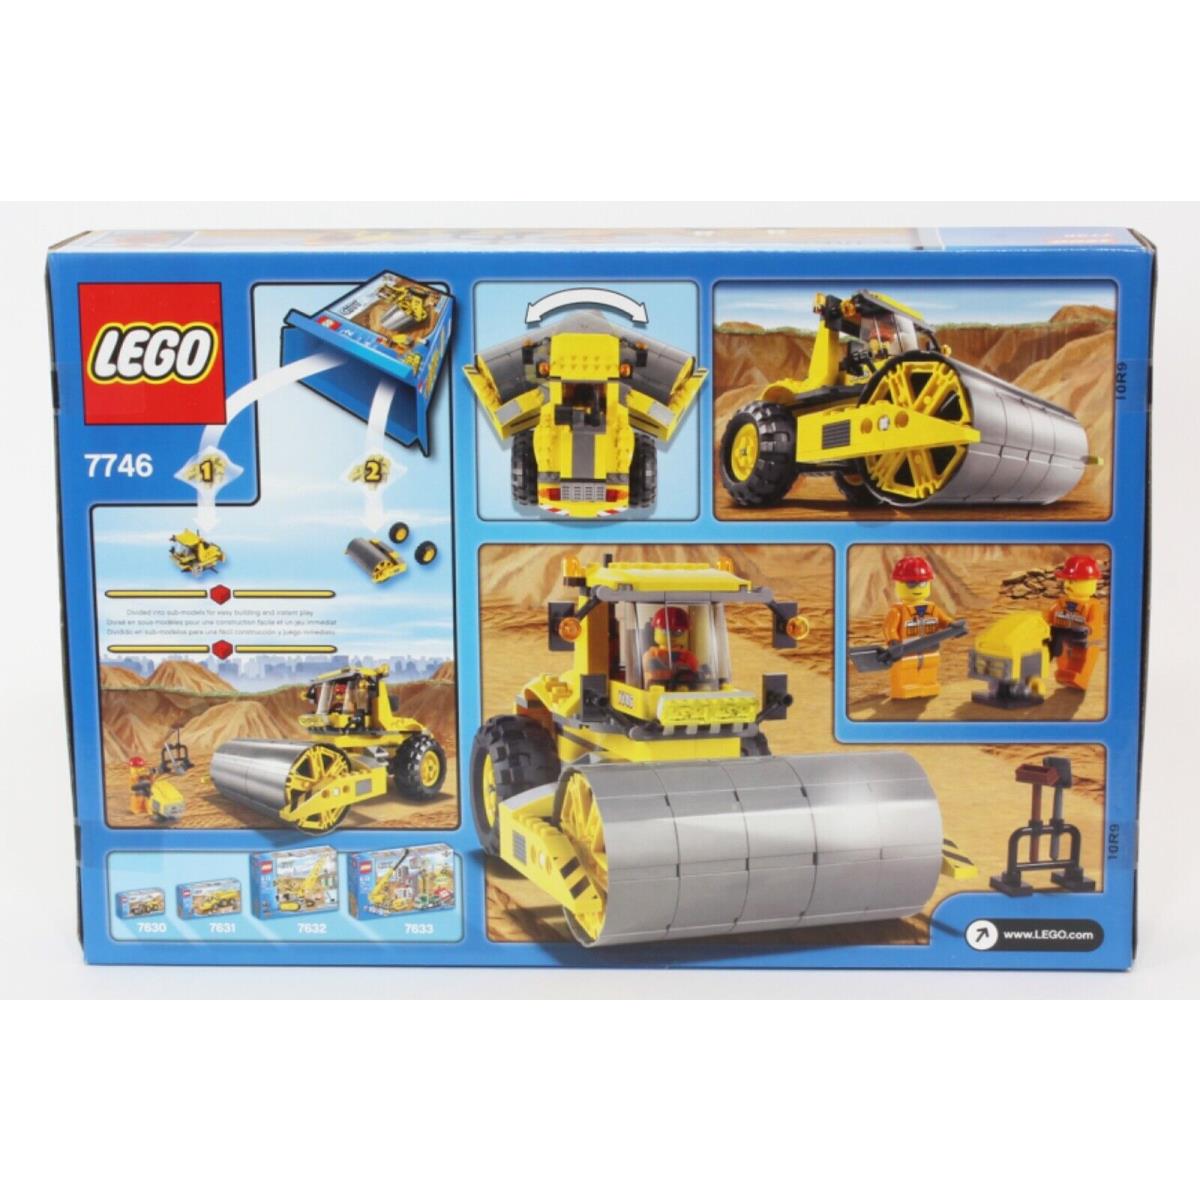 Lego City Single-drum Roller Set 7746 Construction Worker Hard Hat Minifigs